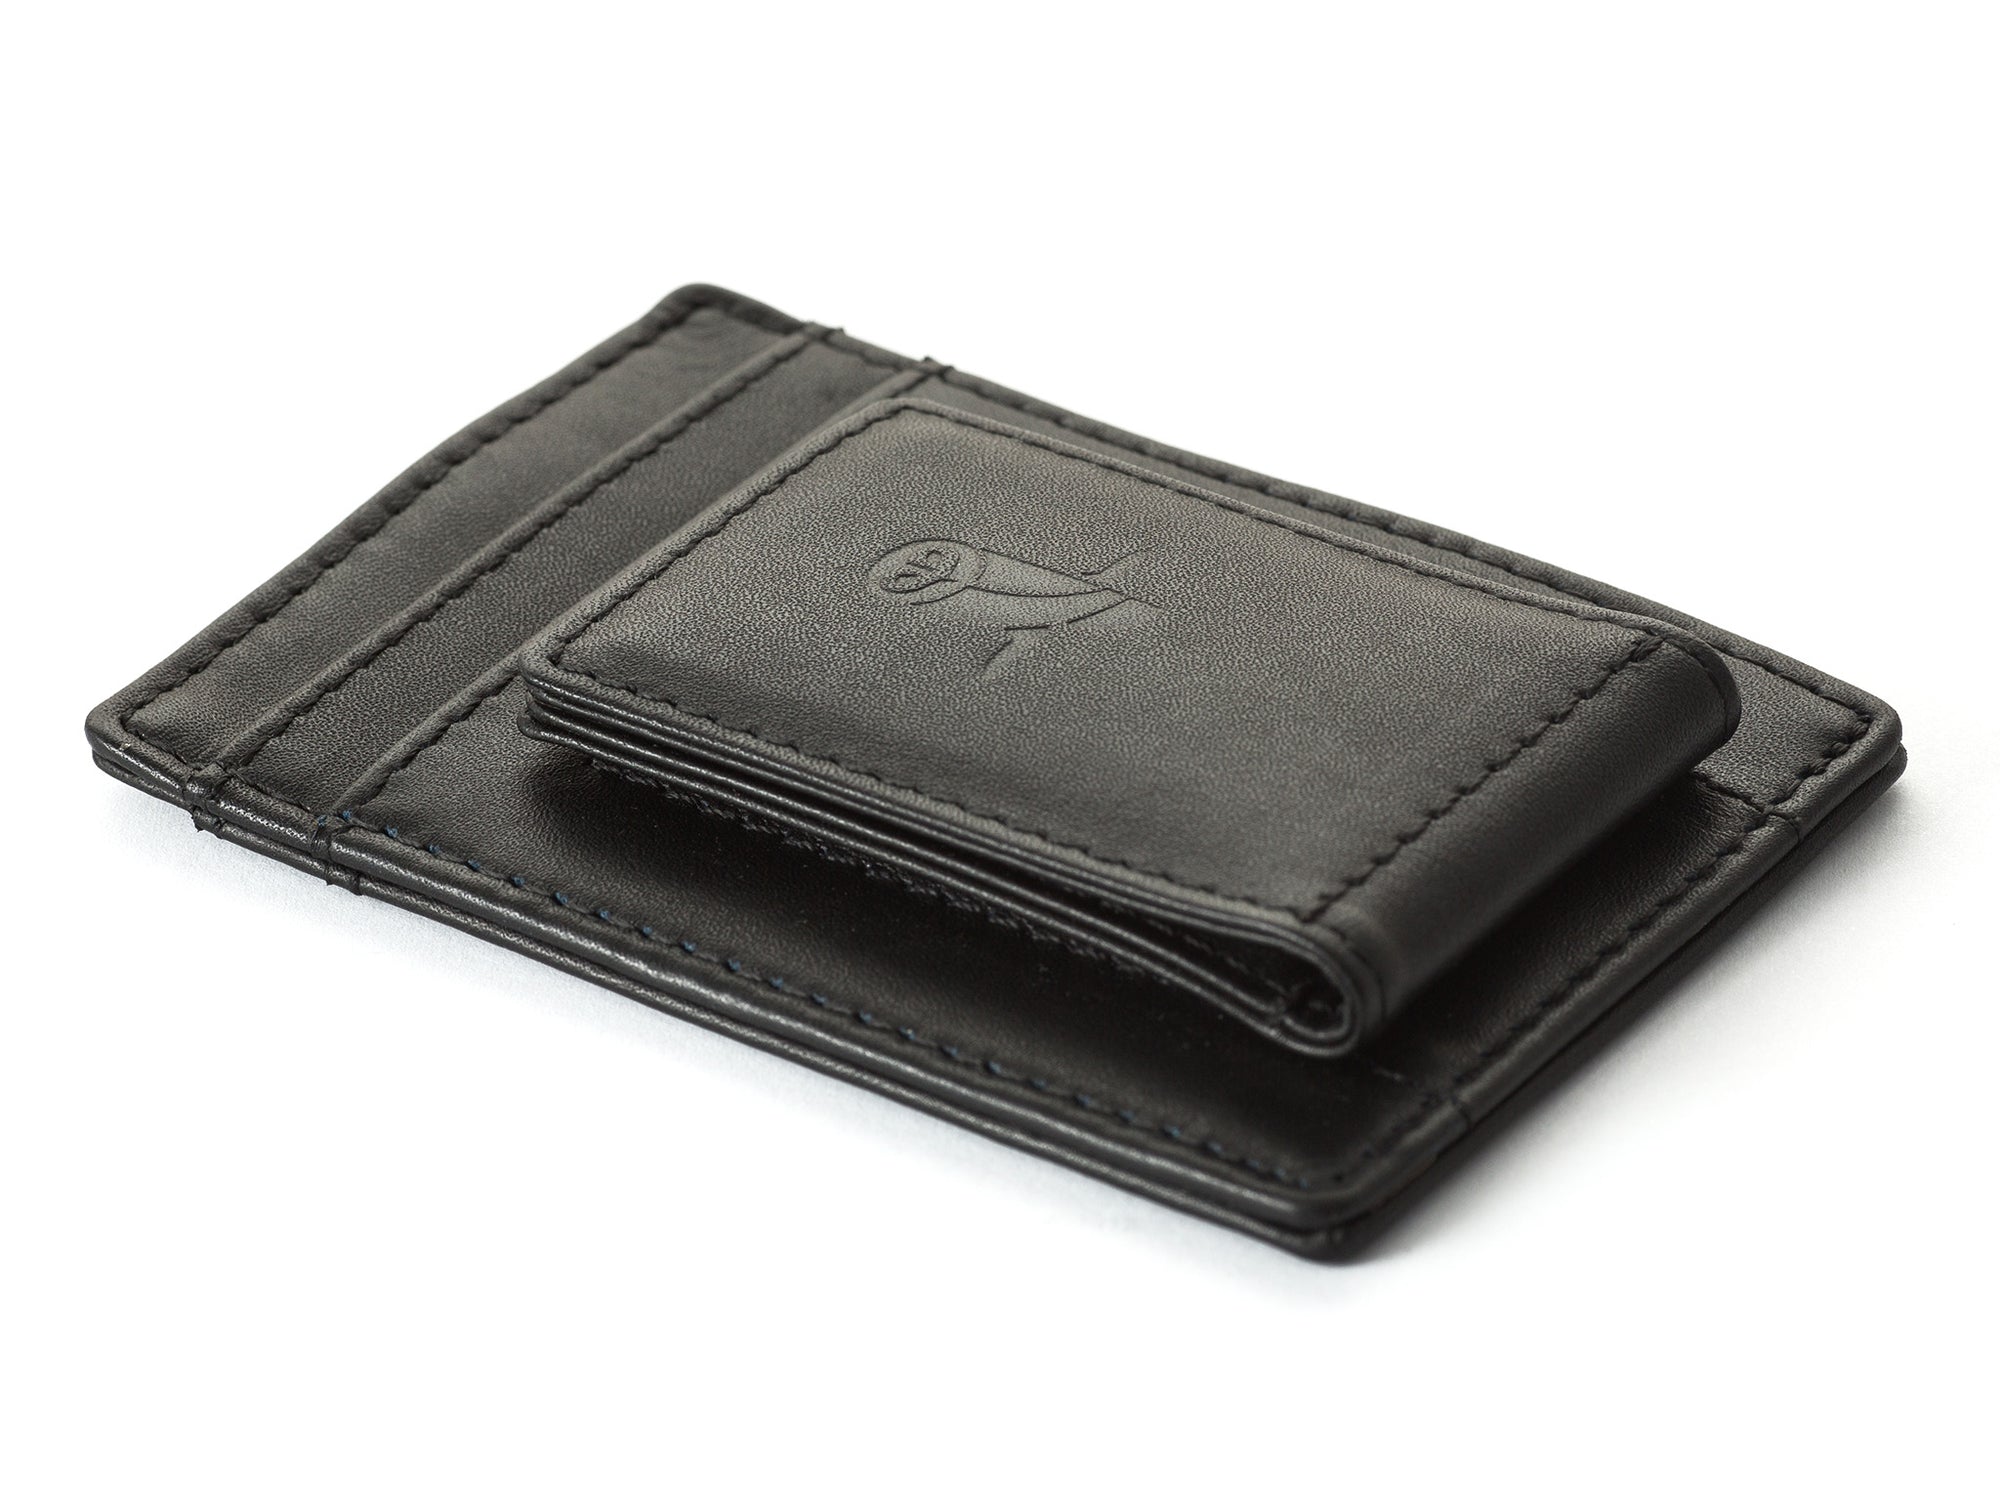 'Fossil' Wallet & Card Holder